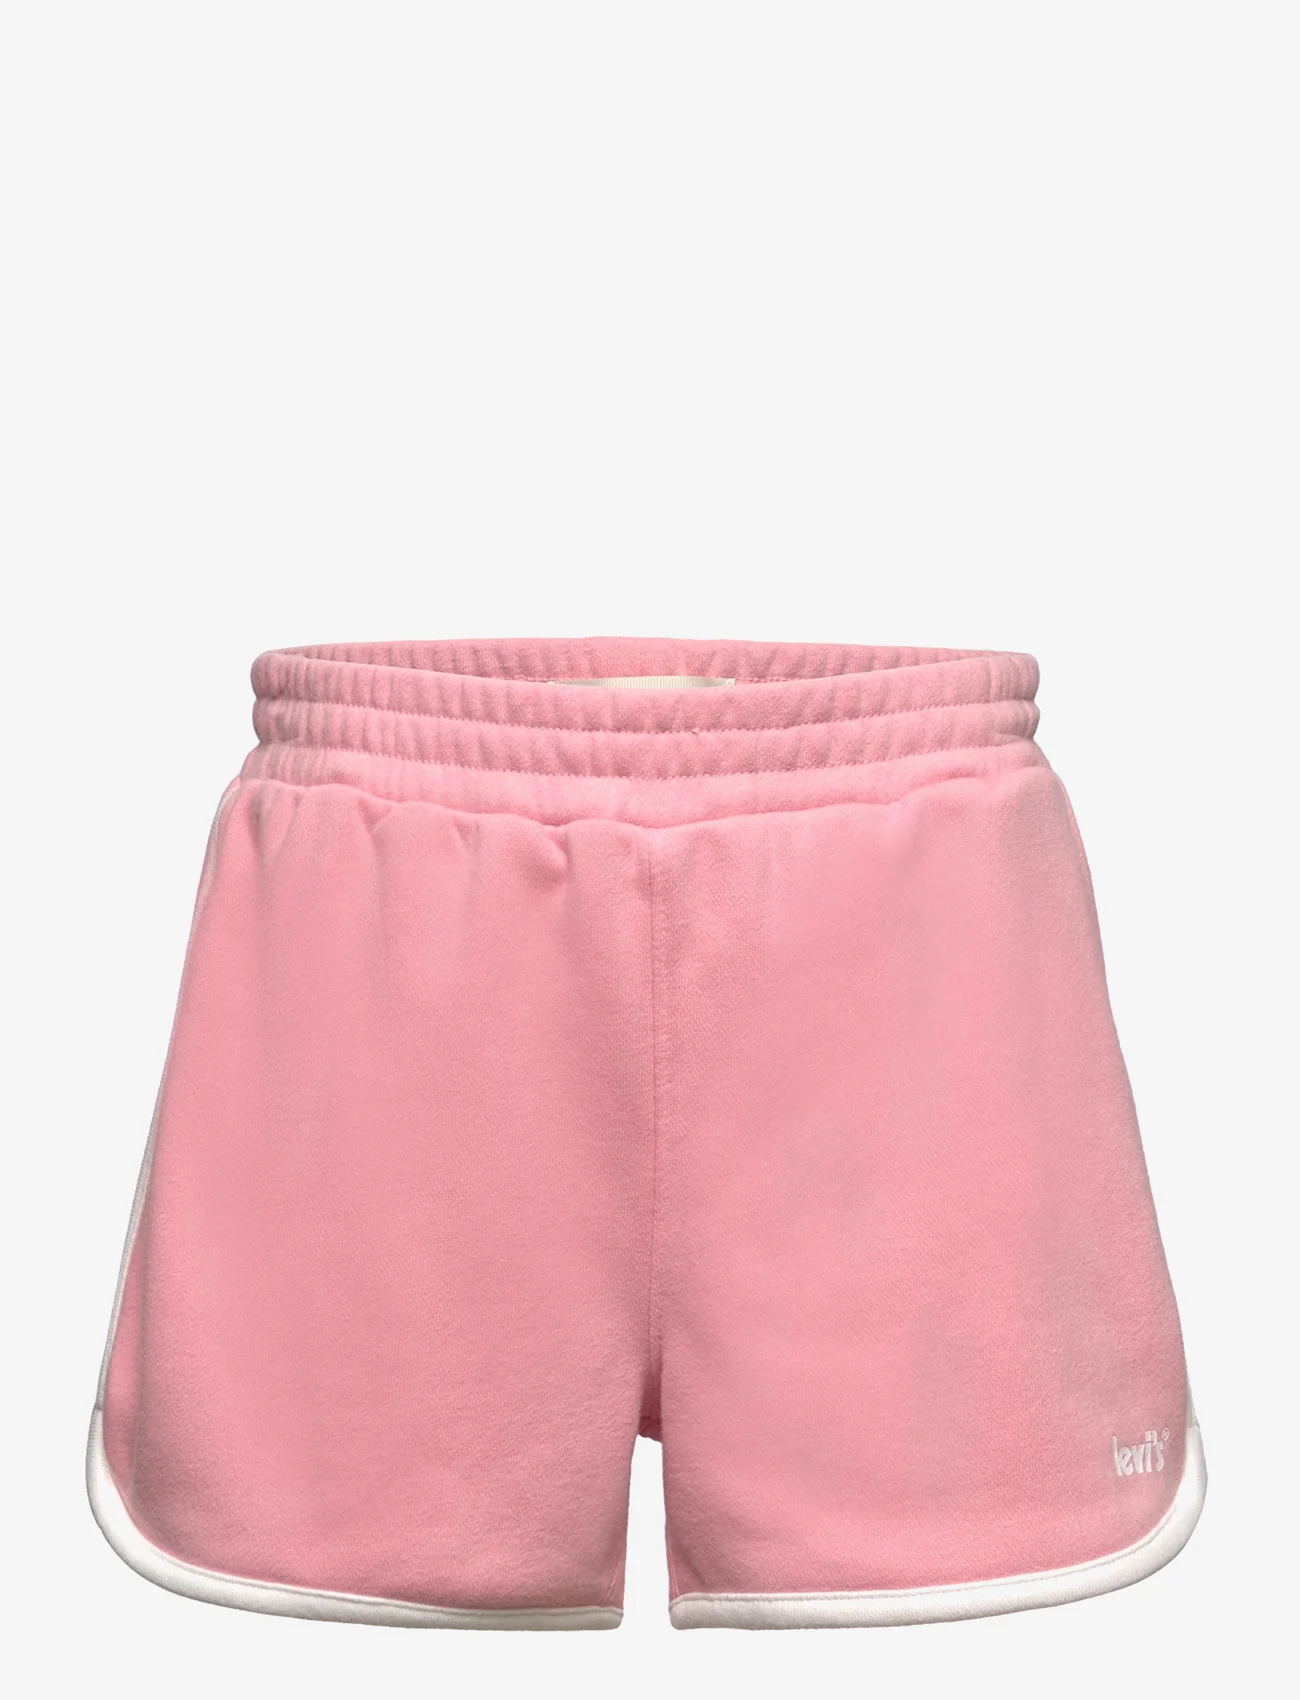 Levi's - Levi's Dolphin Shorts - sweatshorts - pink - 0